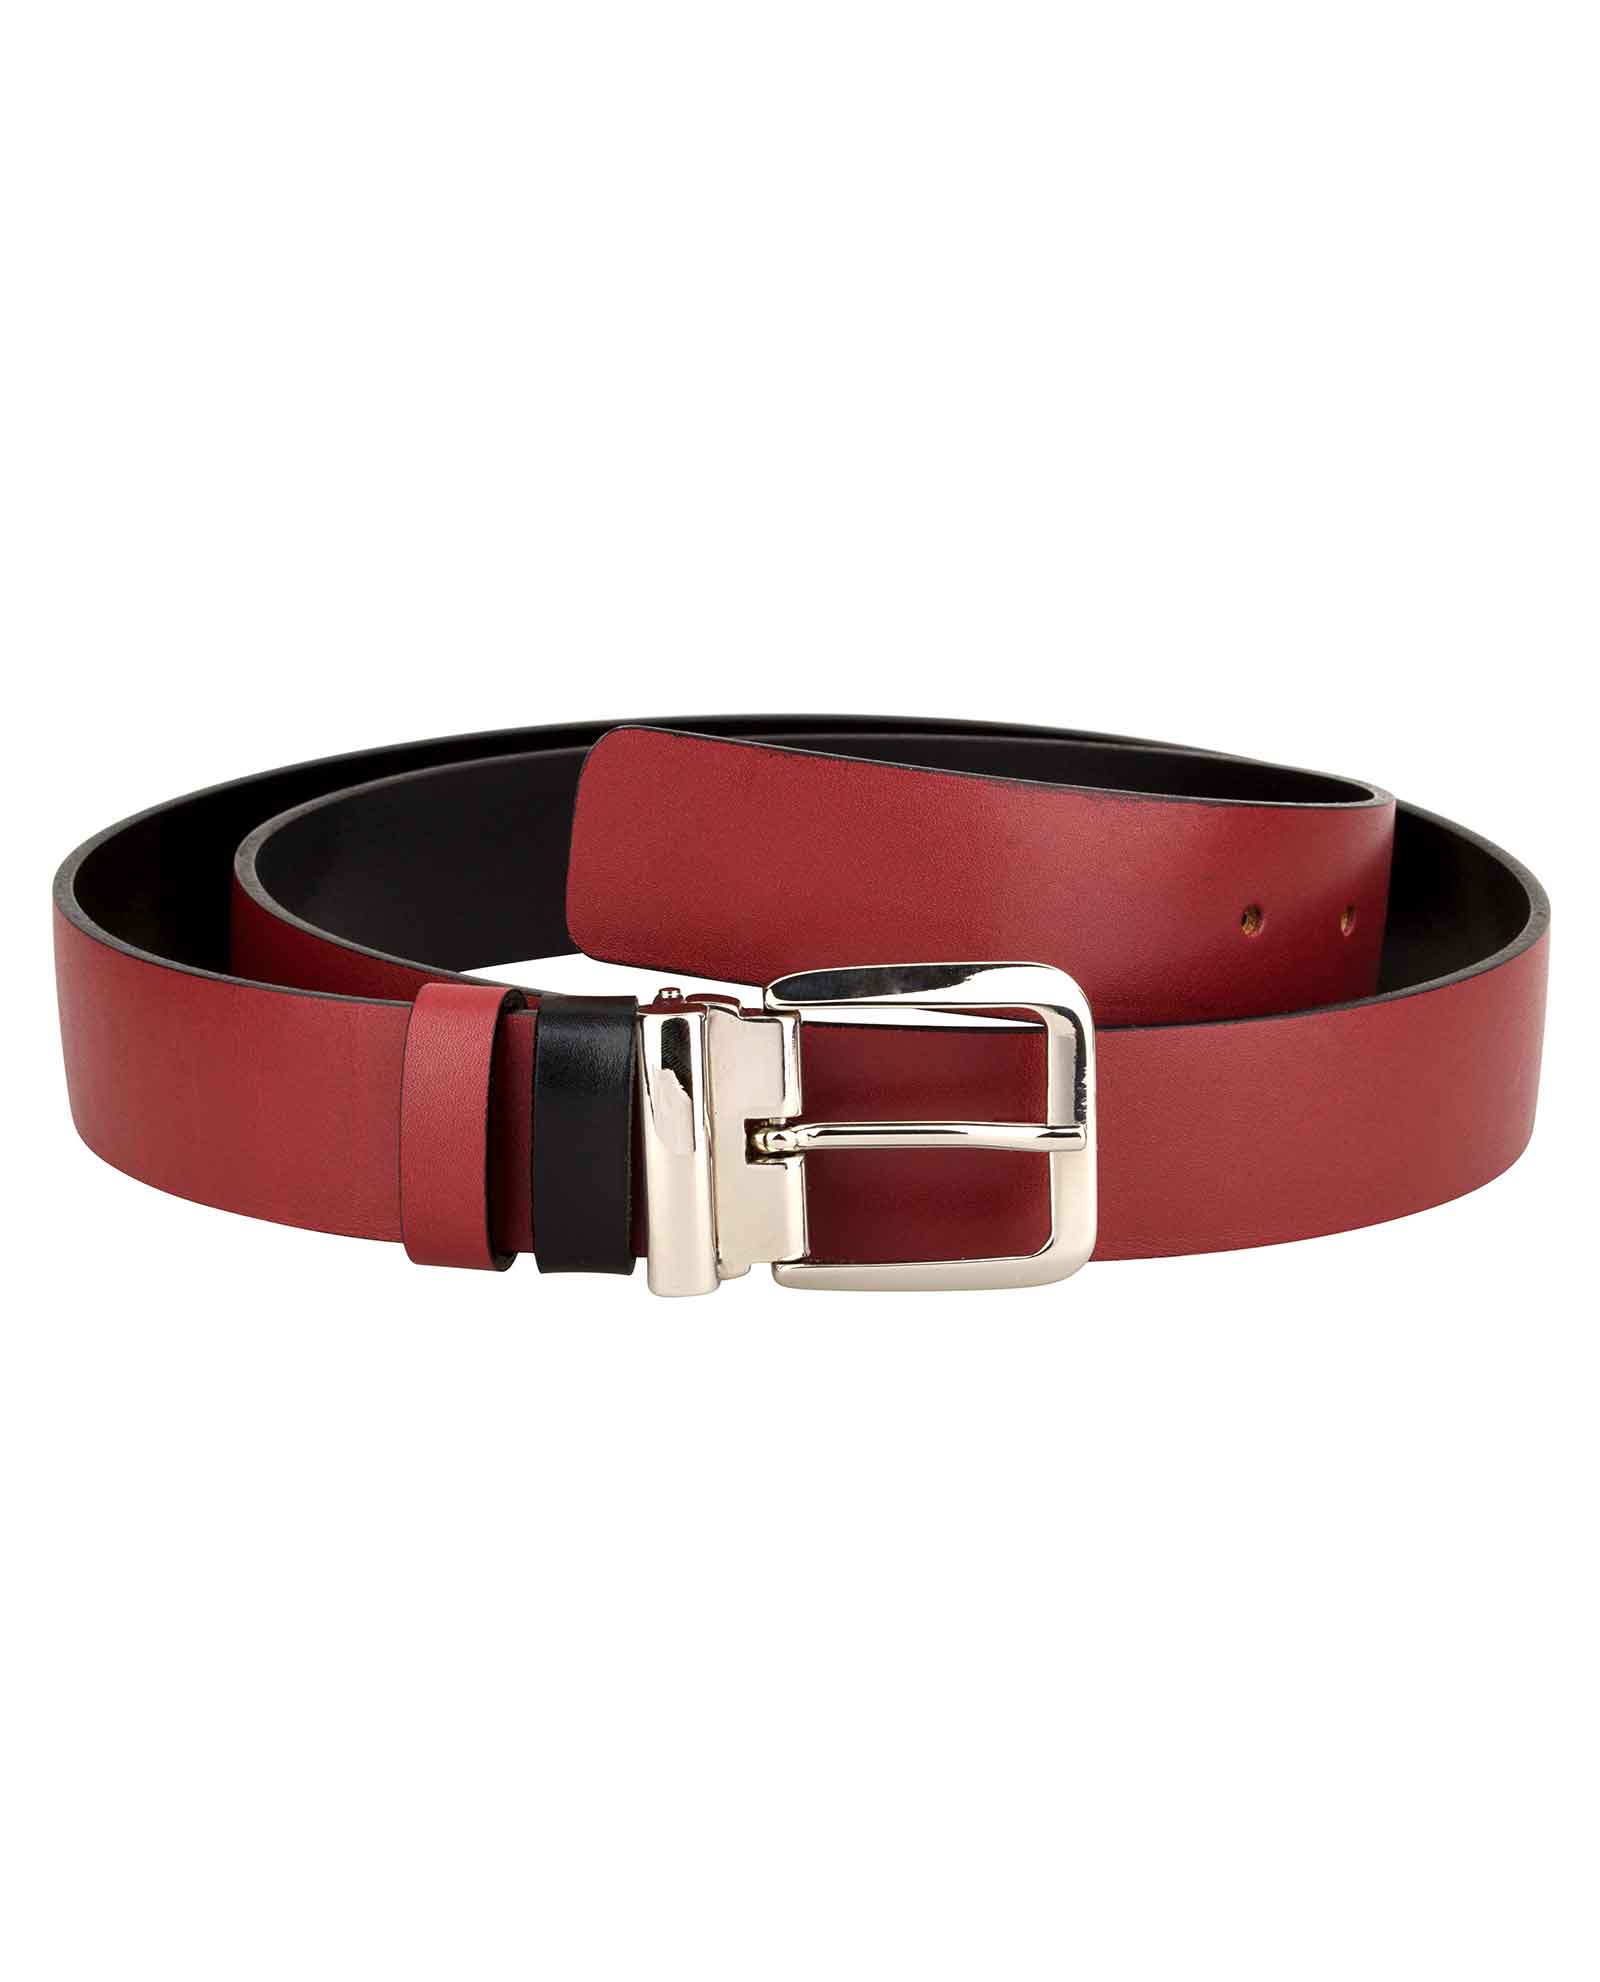 Buy Reversible Burgundy Leather Belt | Men's Buckle | Free Shipping